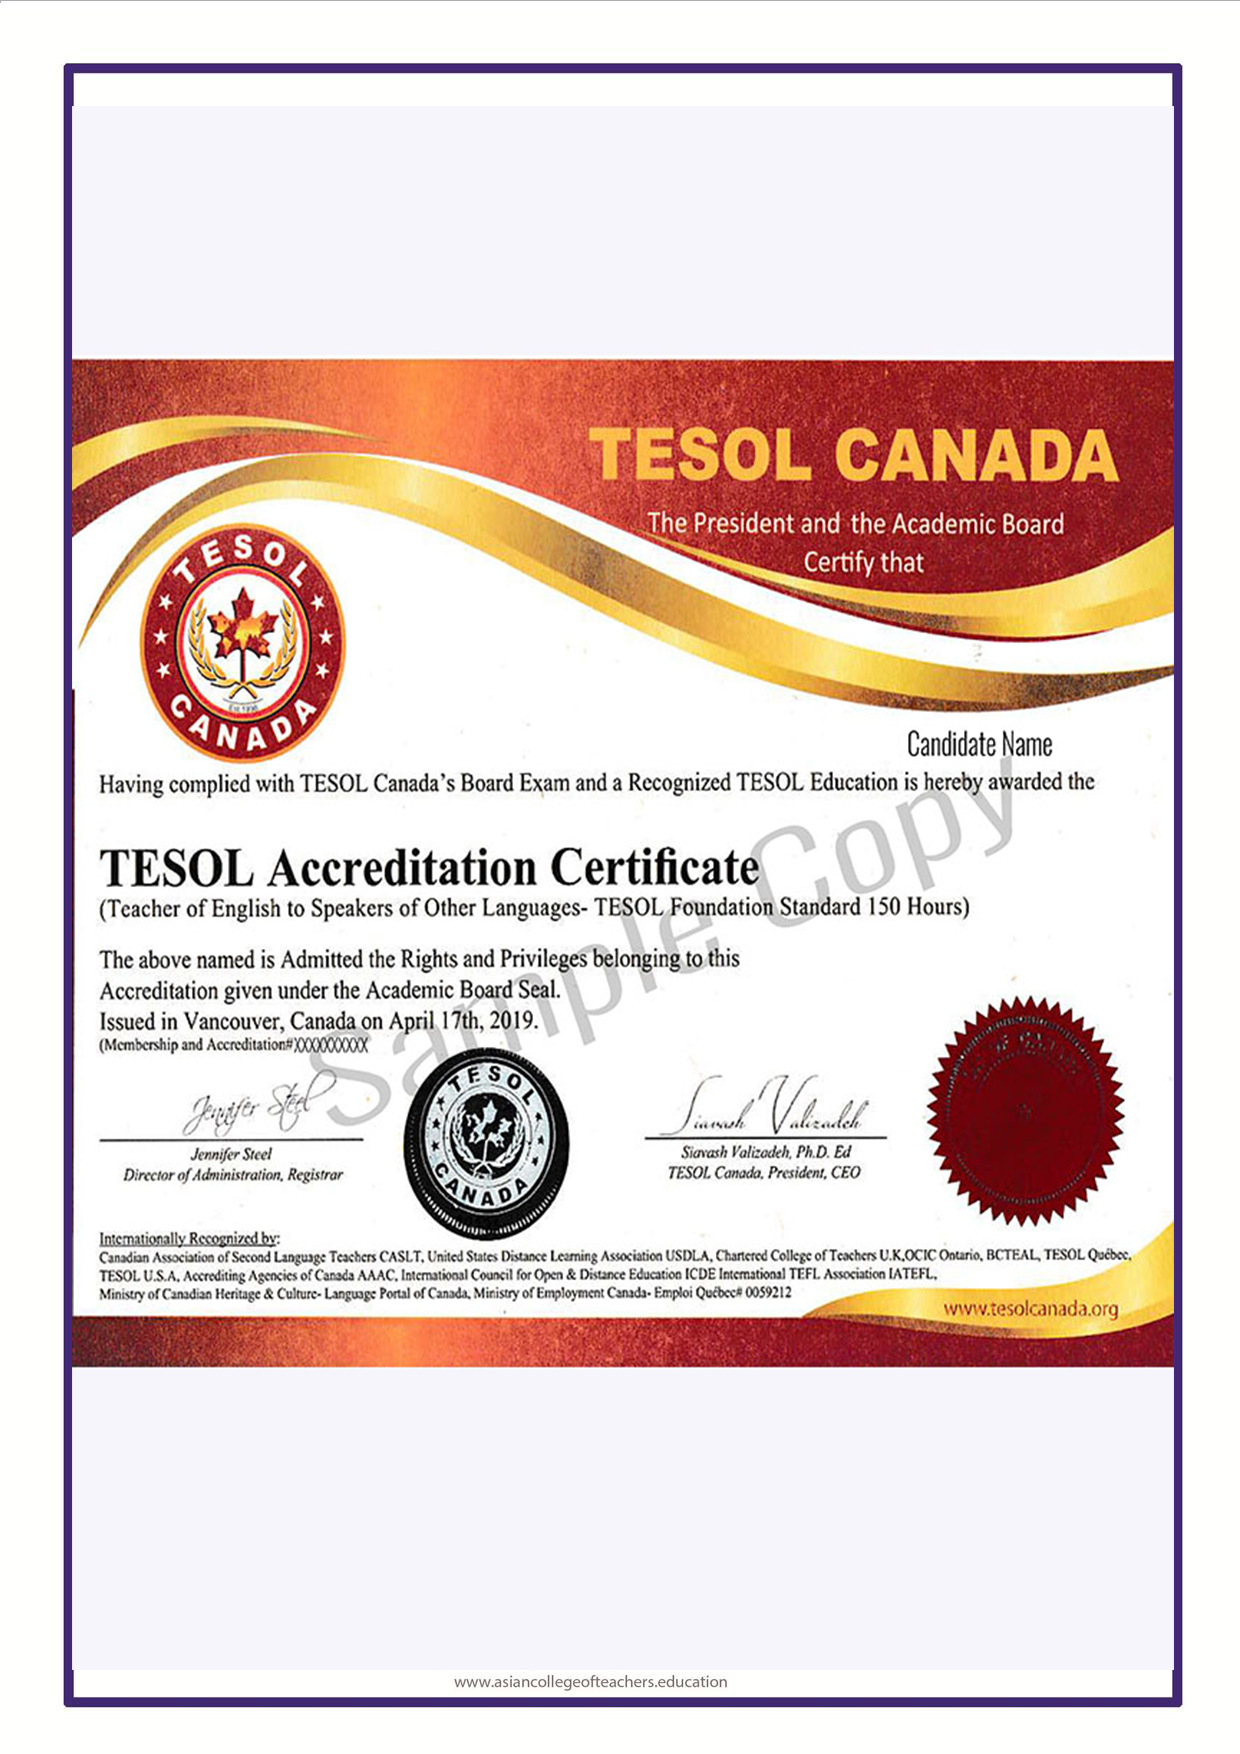 TESOL Accredation Certificate Sample